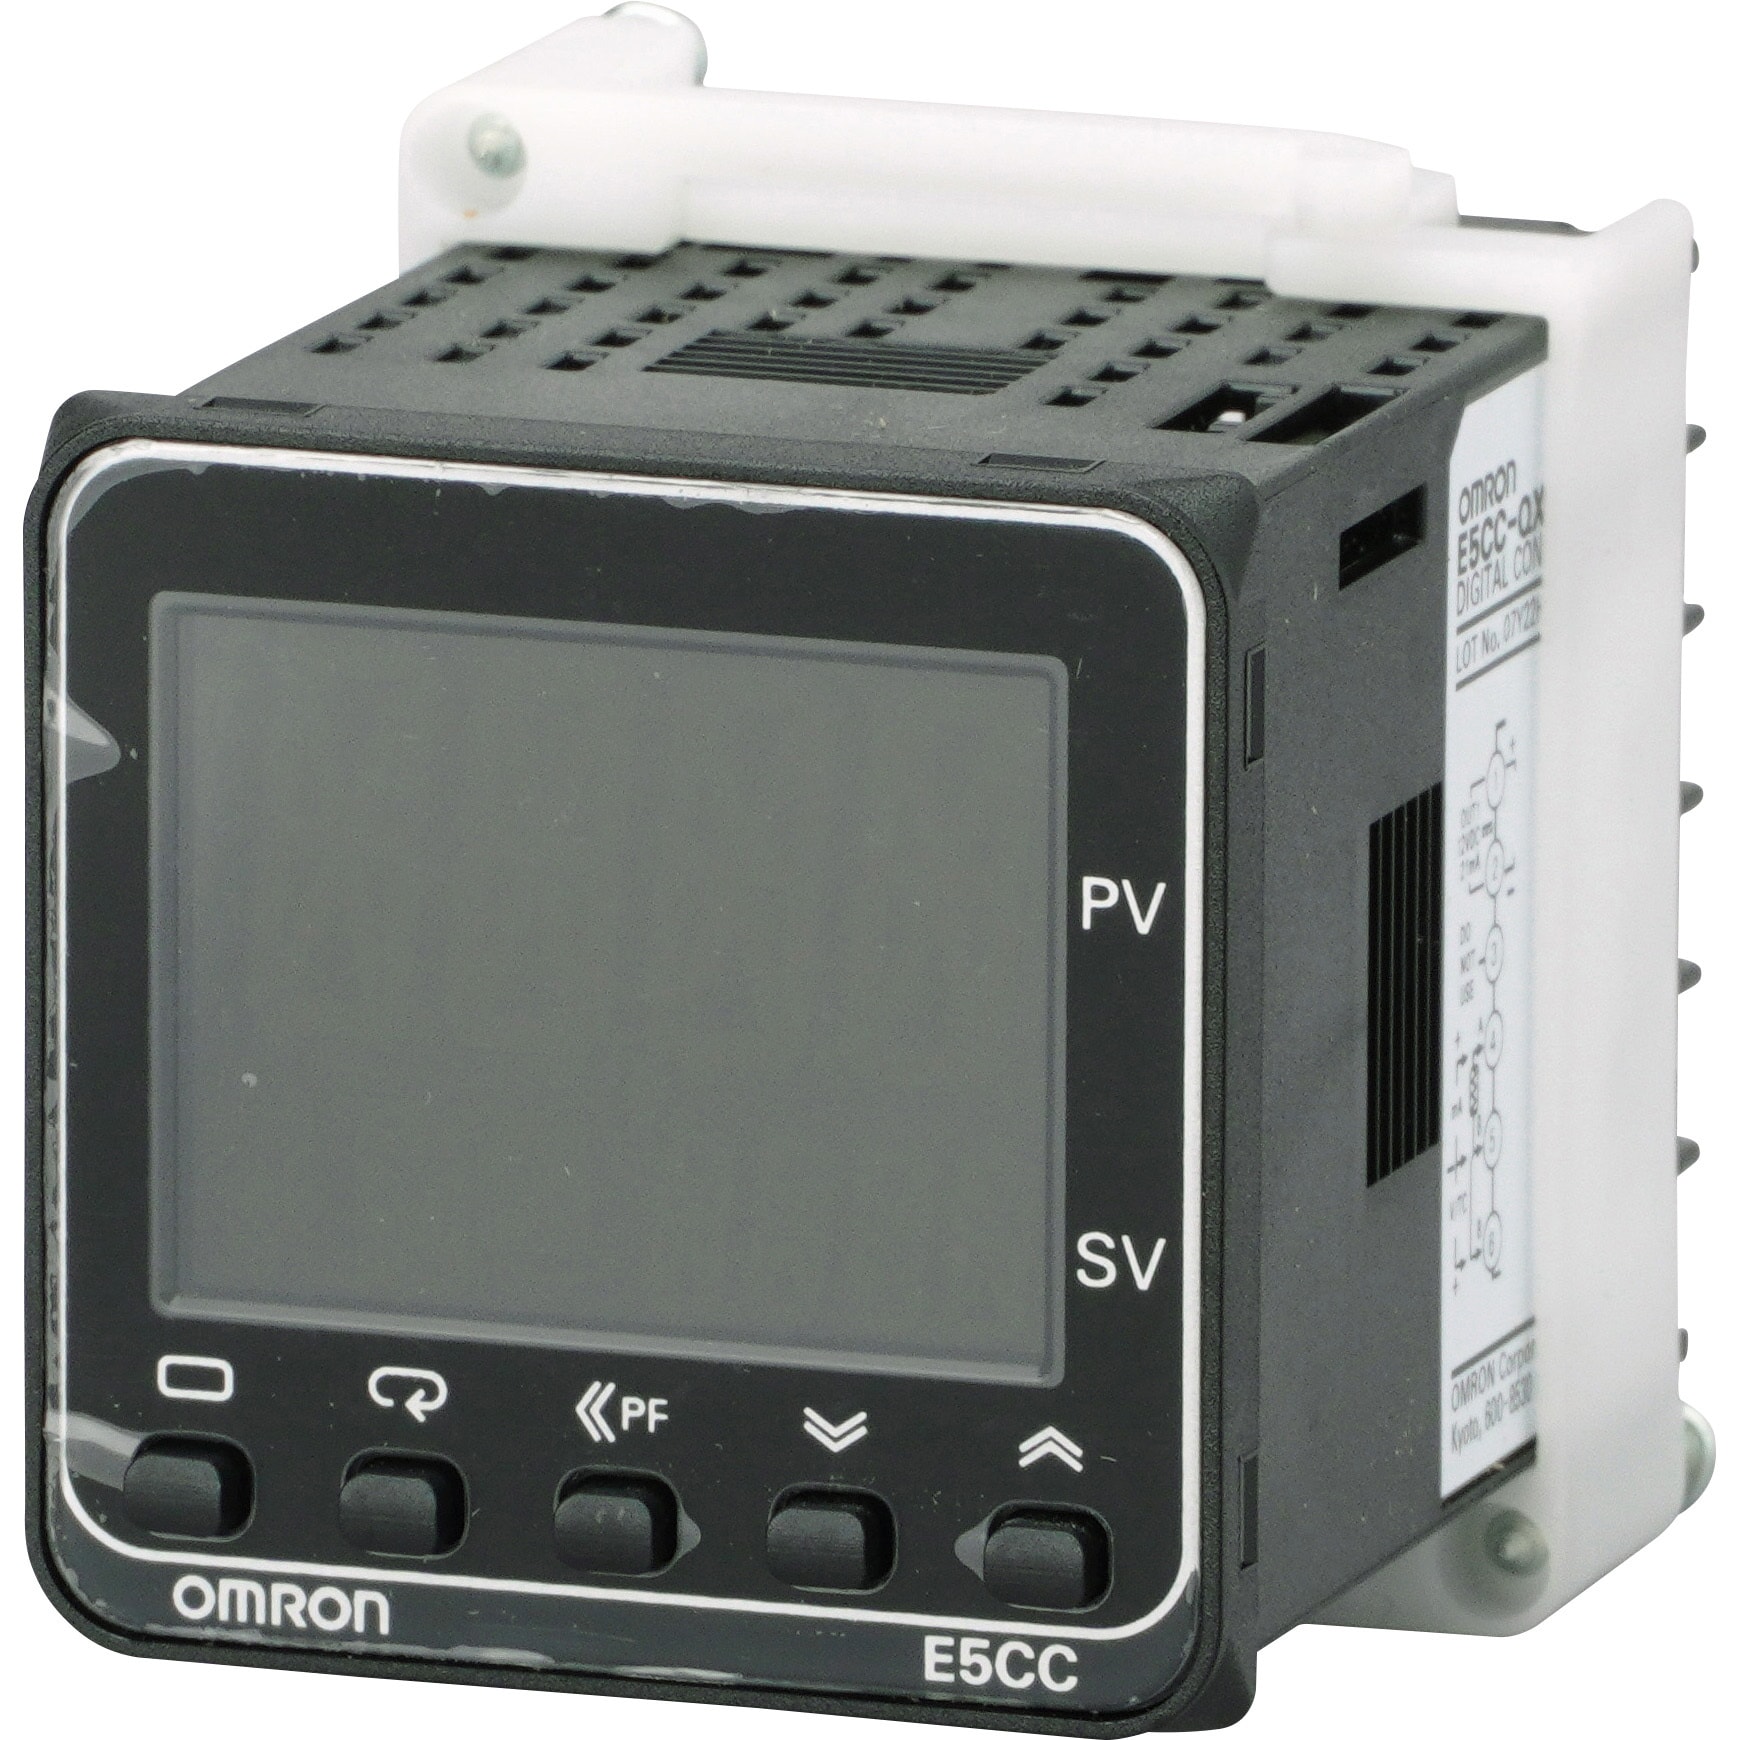 omron 温度調節器(デジタル調節計) - 3